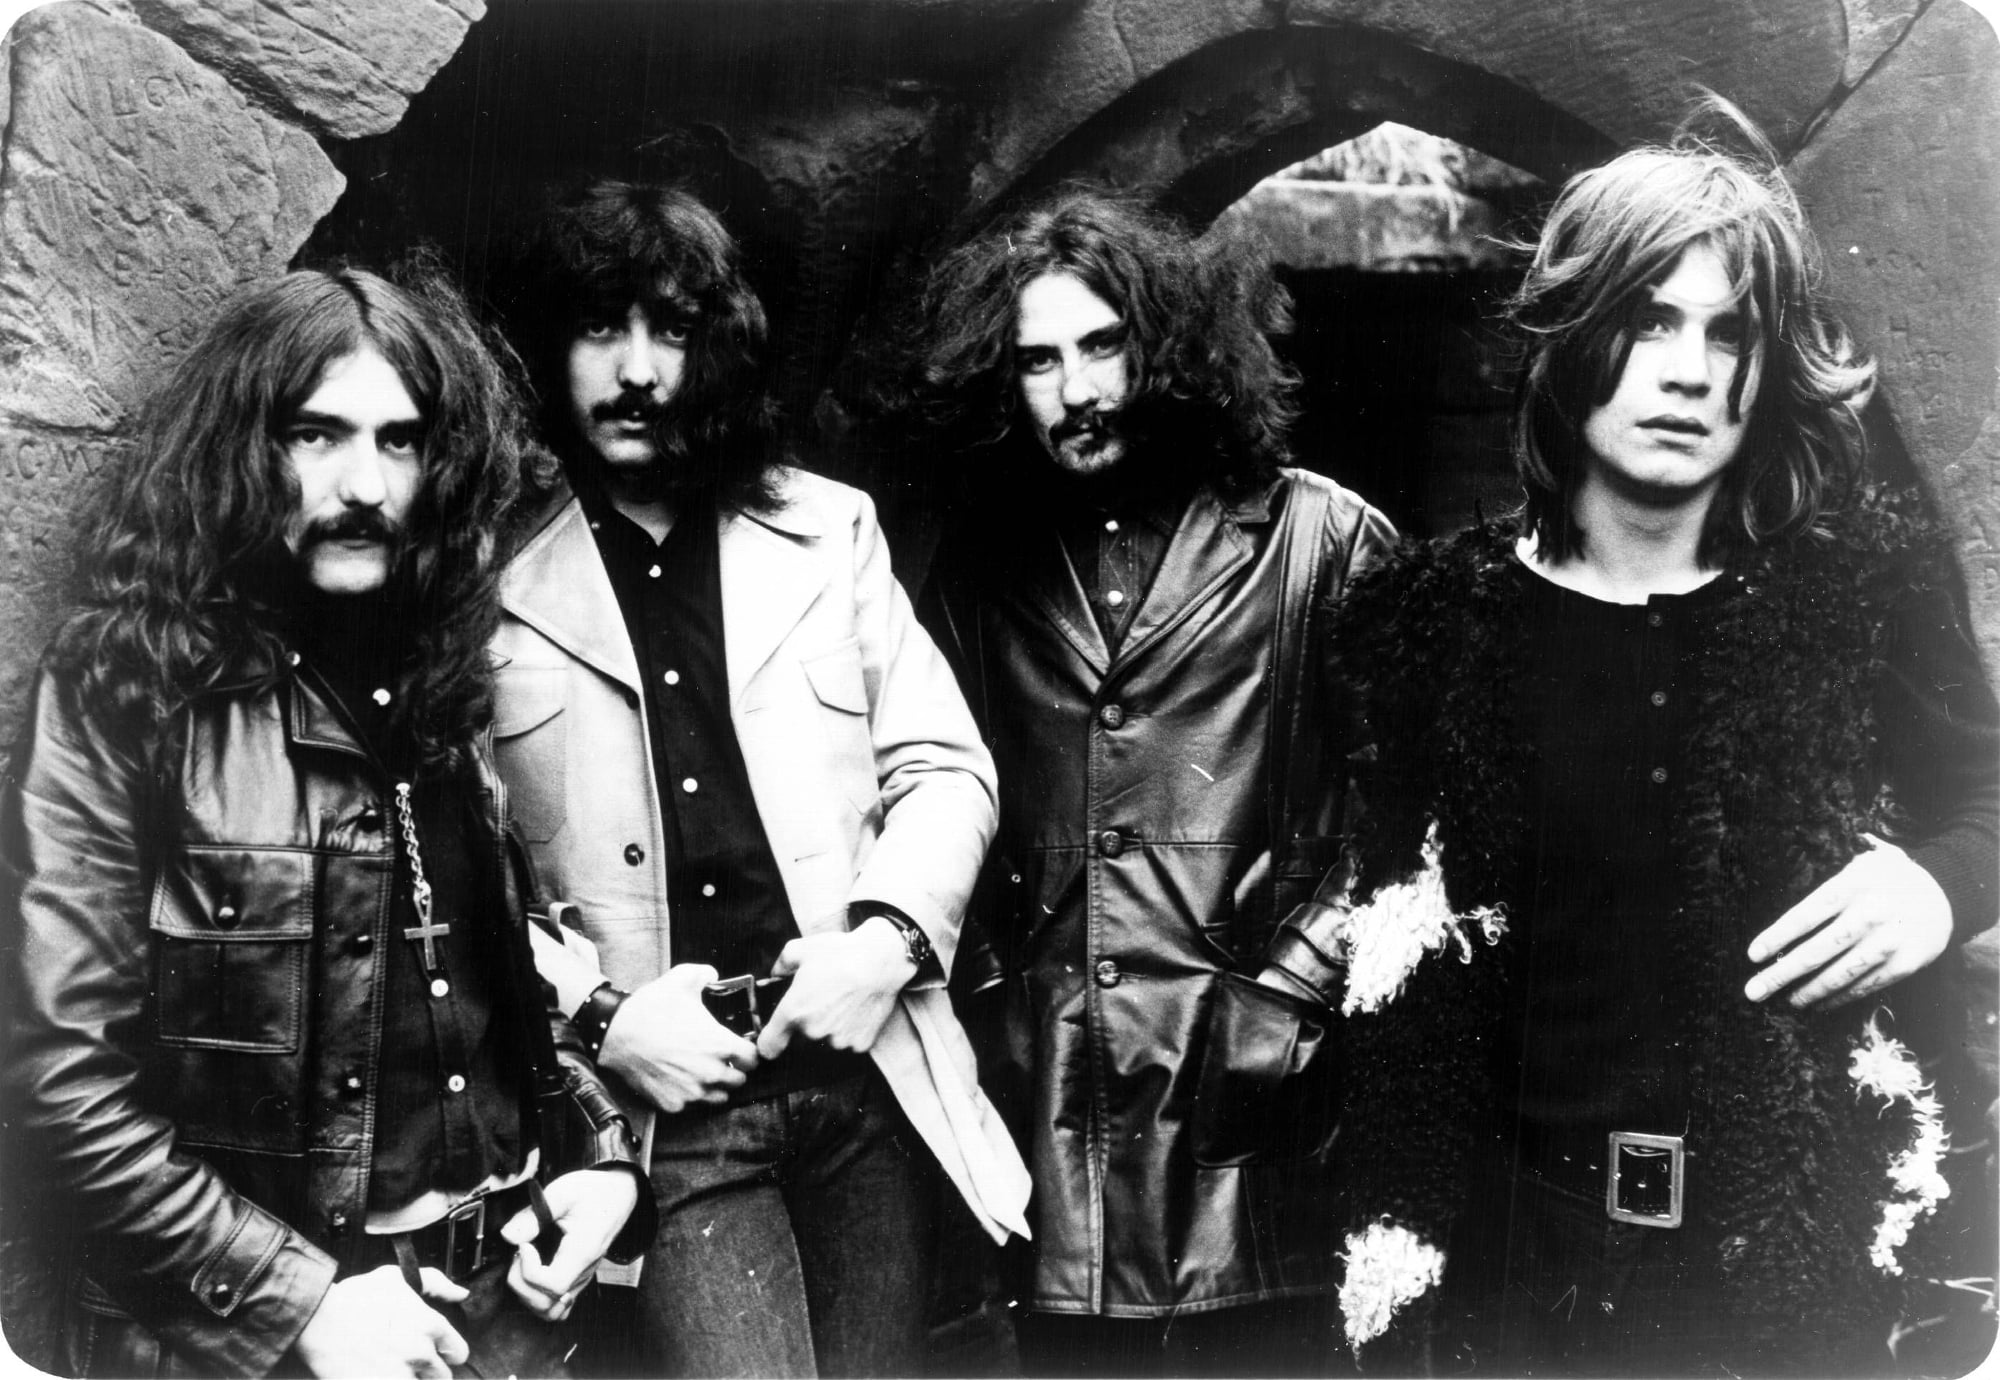 Charles Bradley on Covering Black Sabbath, Emotional New LP